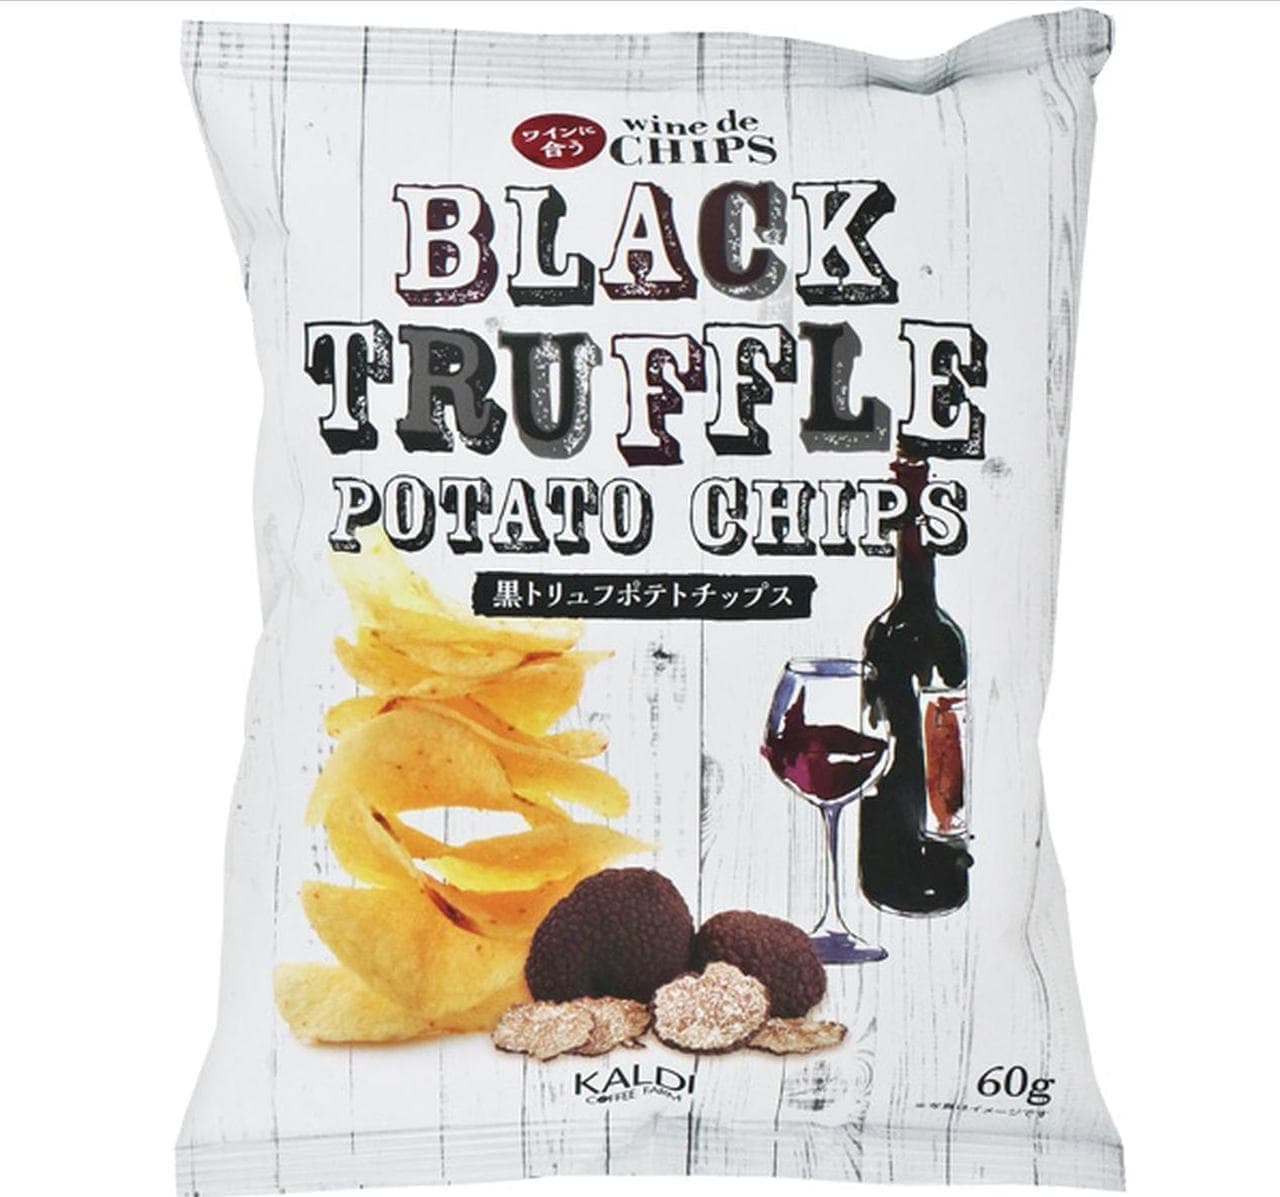 KALDI "KALDI Original Wine Dechips Black Truffle Potato Chips"